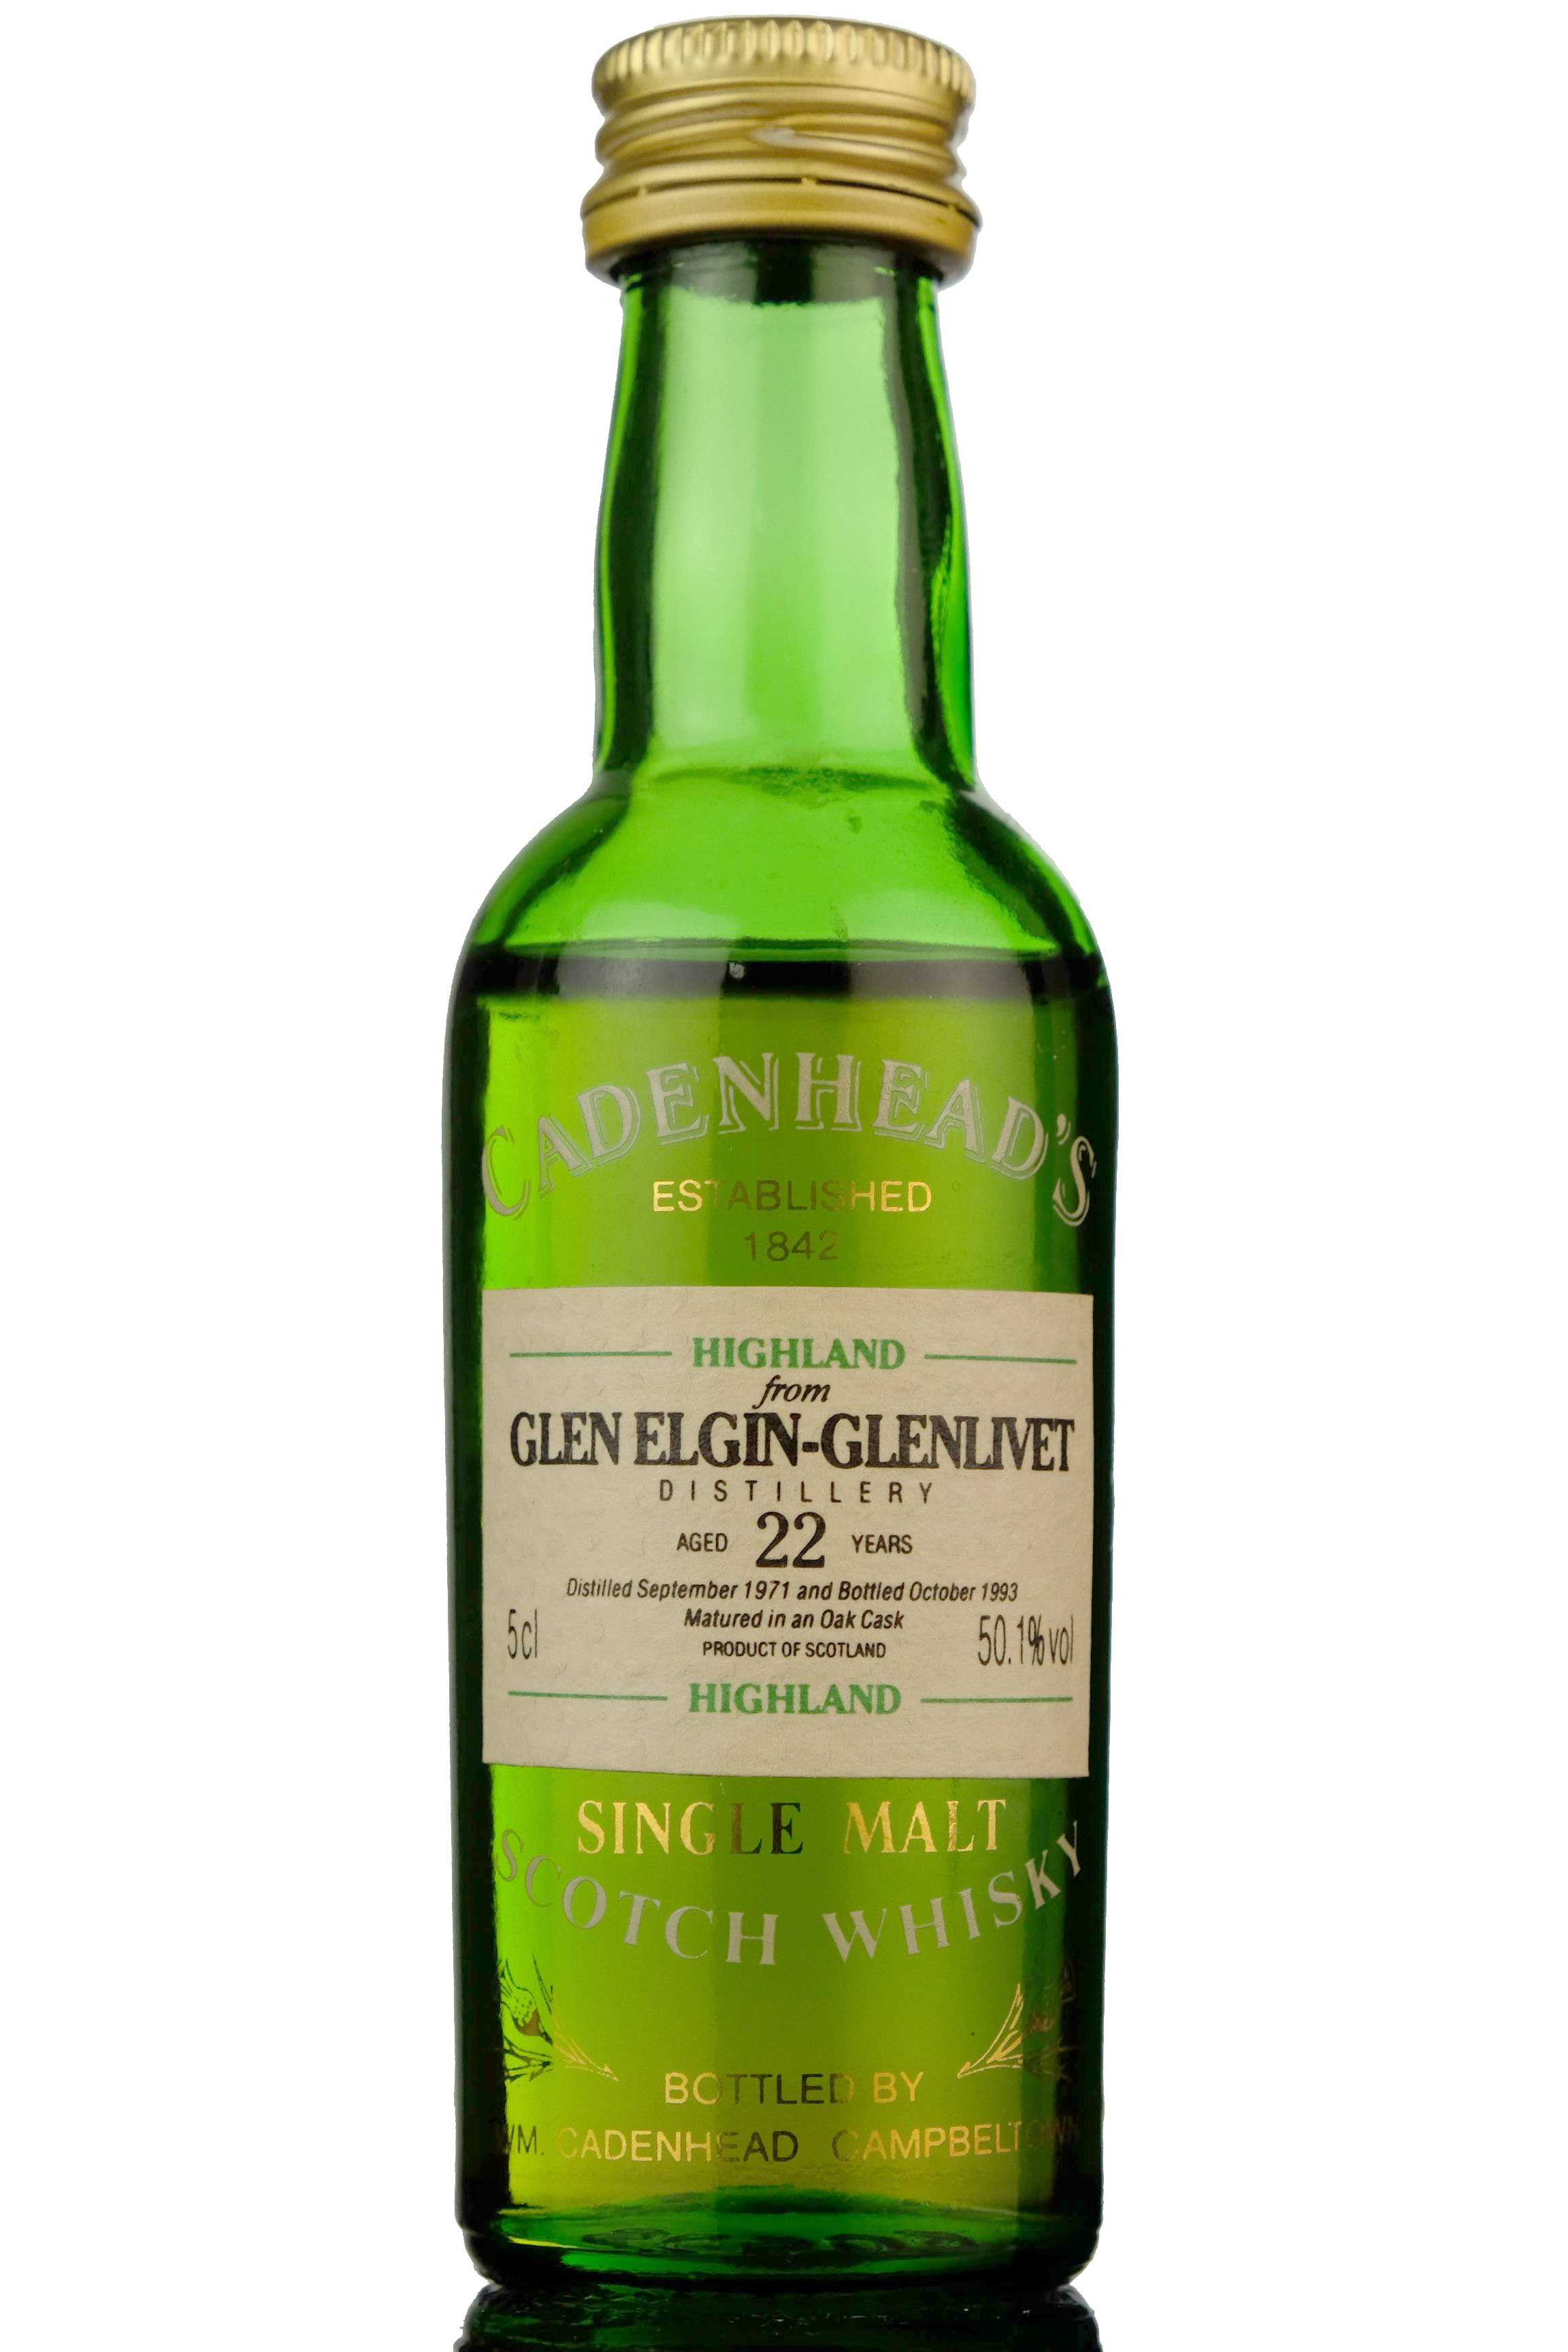 Glen Elgin-Glenlivet 1971-1993 - 22 Year Old - Cadenhead Miniature